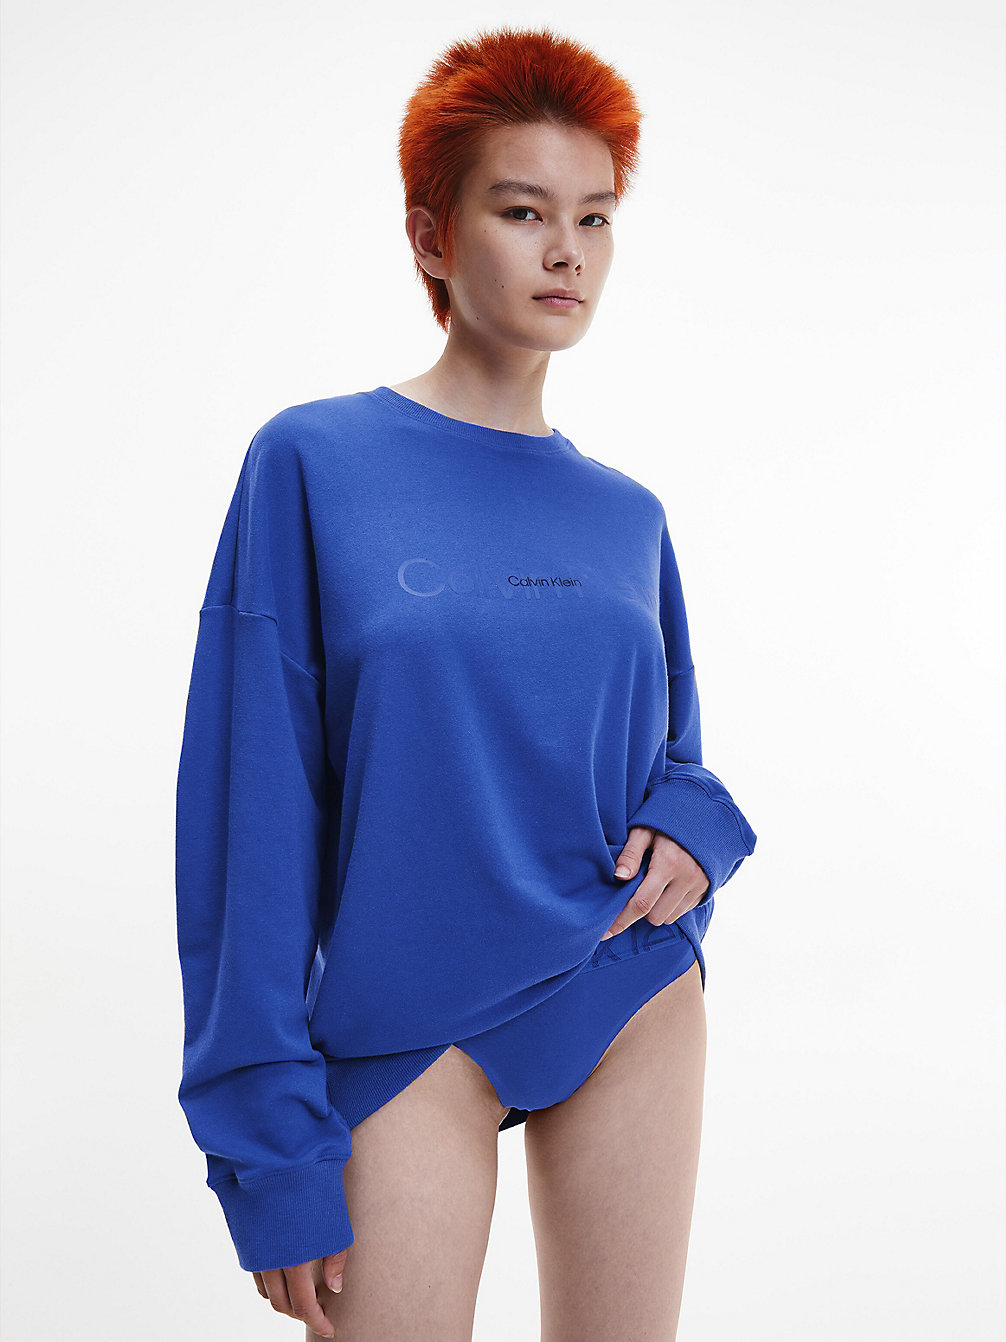 CLEMATIS Haut De Pyjama - Embossed Icon undefined femmes Calvin Klein